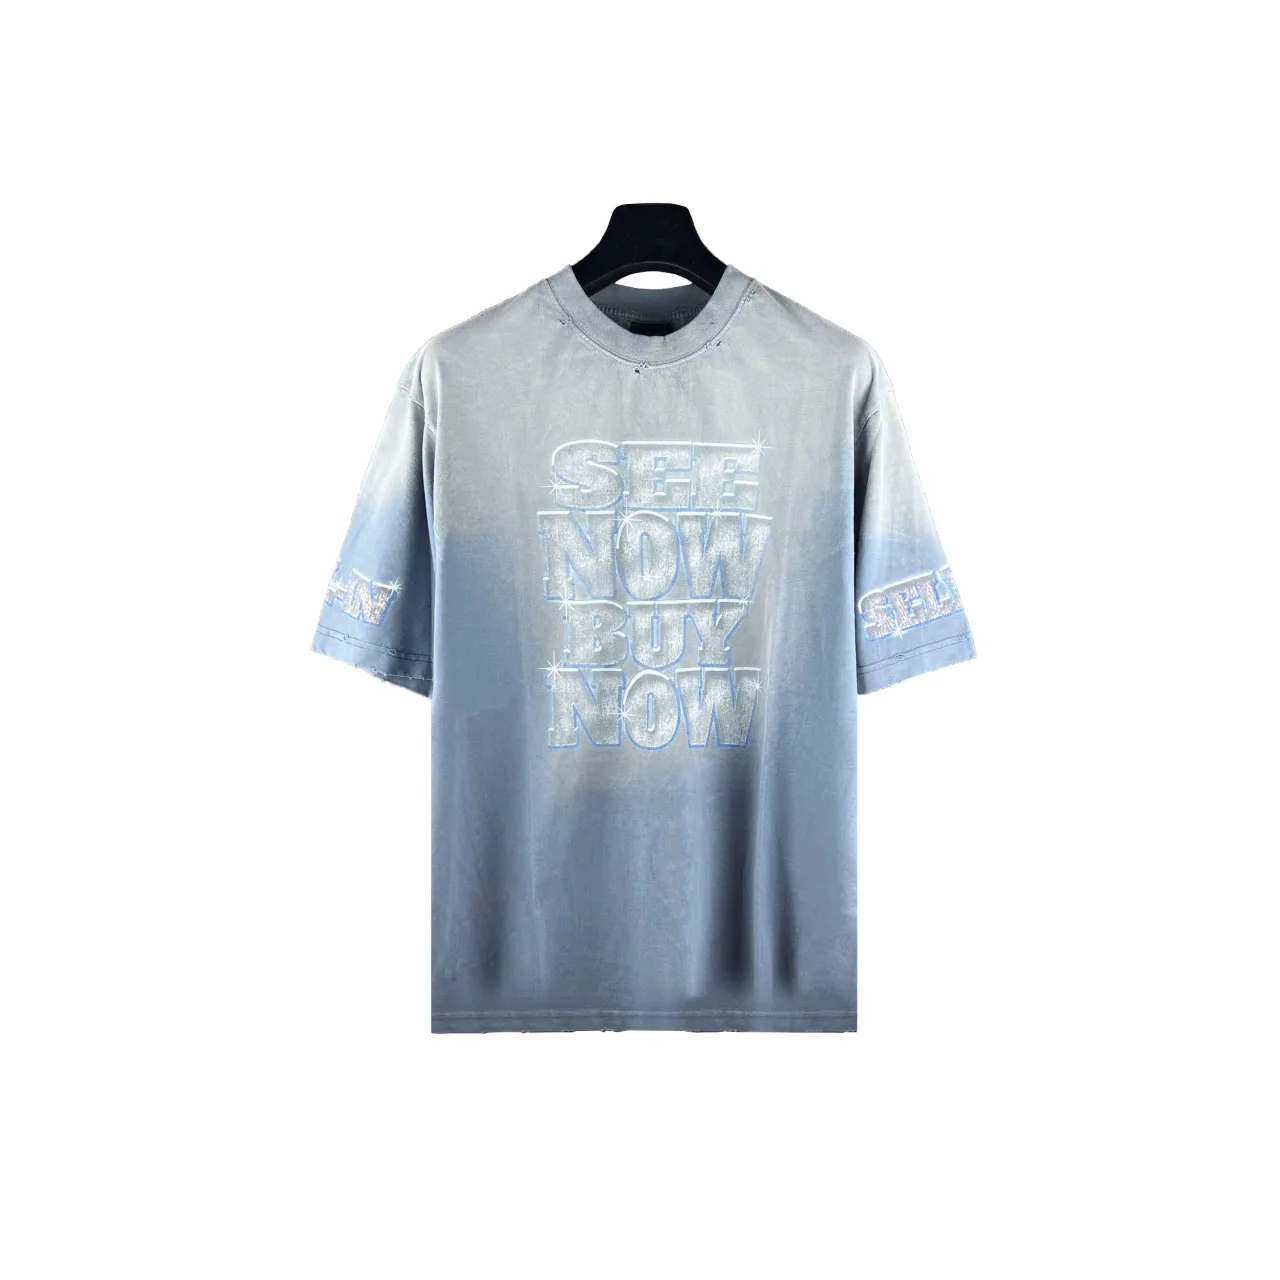 

24 Spring Summer Men's Luxury Brand T shirt SNBN Logo T shirts High Quality Washed Denim Blue Cotton Tshirt Women Oversize Tees